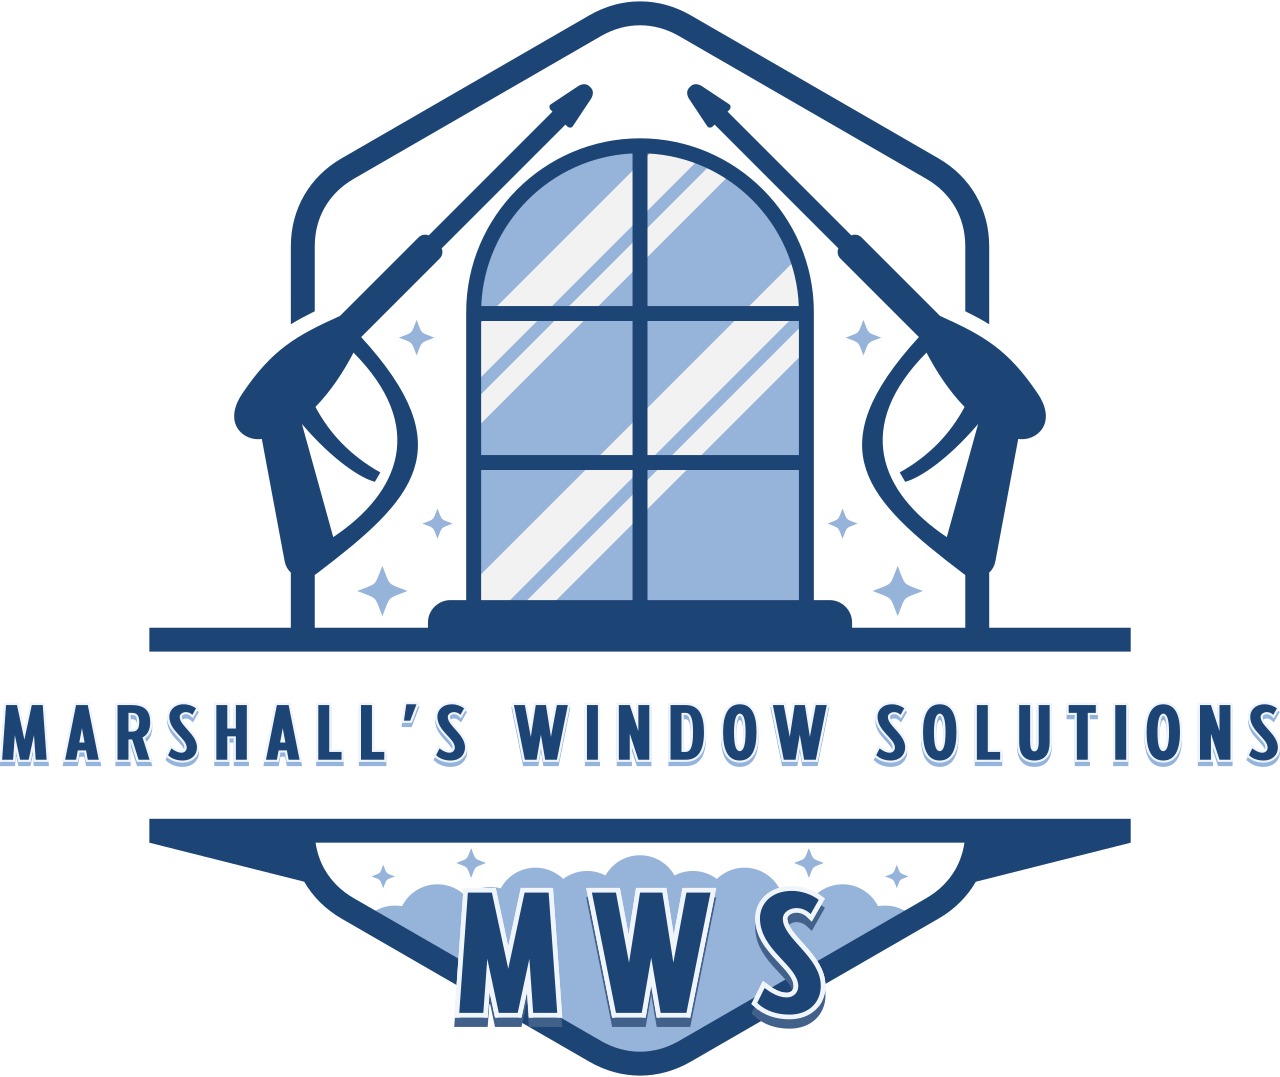 Marshall’s Window Solutions's logo